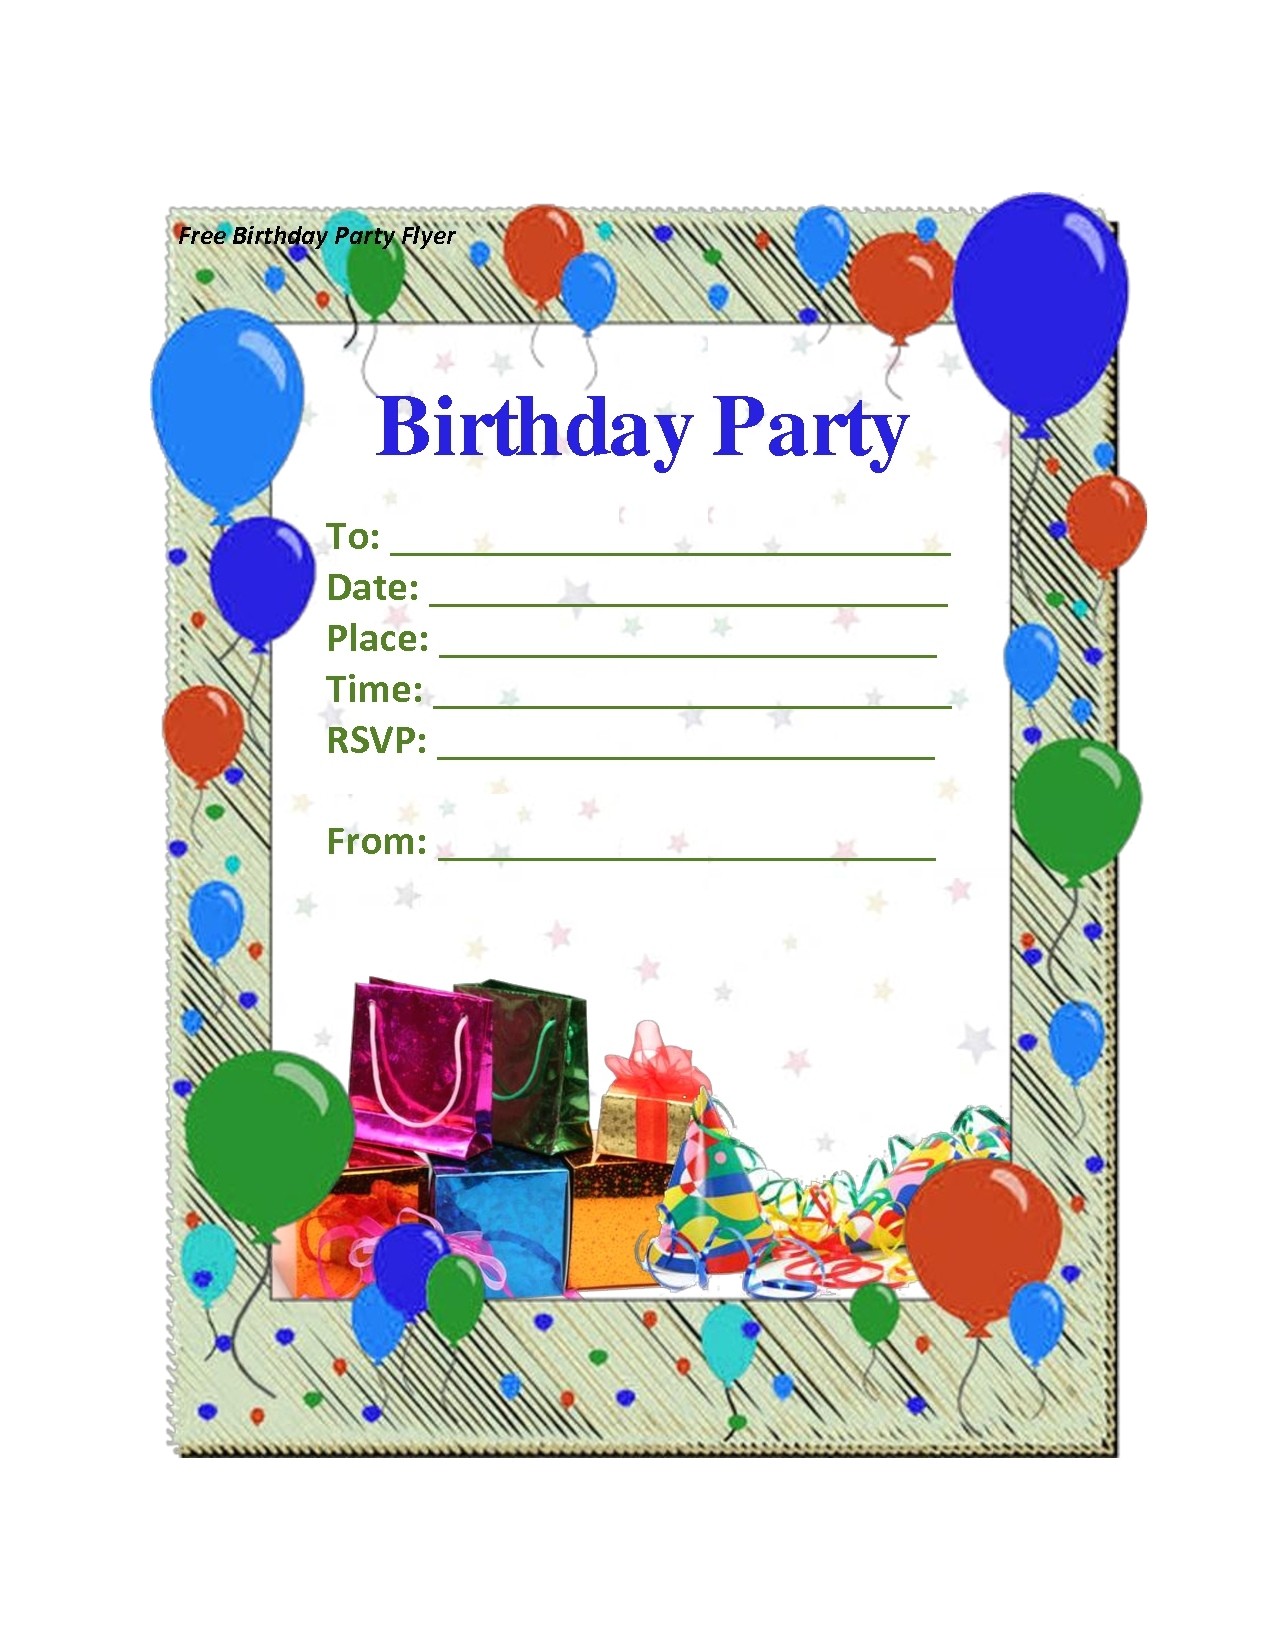 Birthday Postcard Invitations Templates Free Kids Birthday Card Template Resume Builder